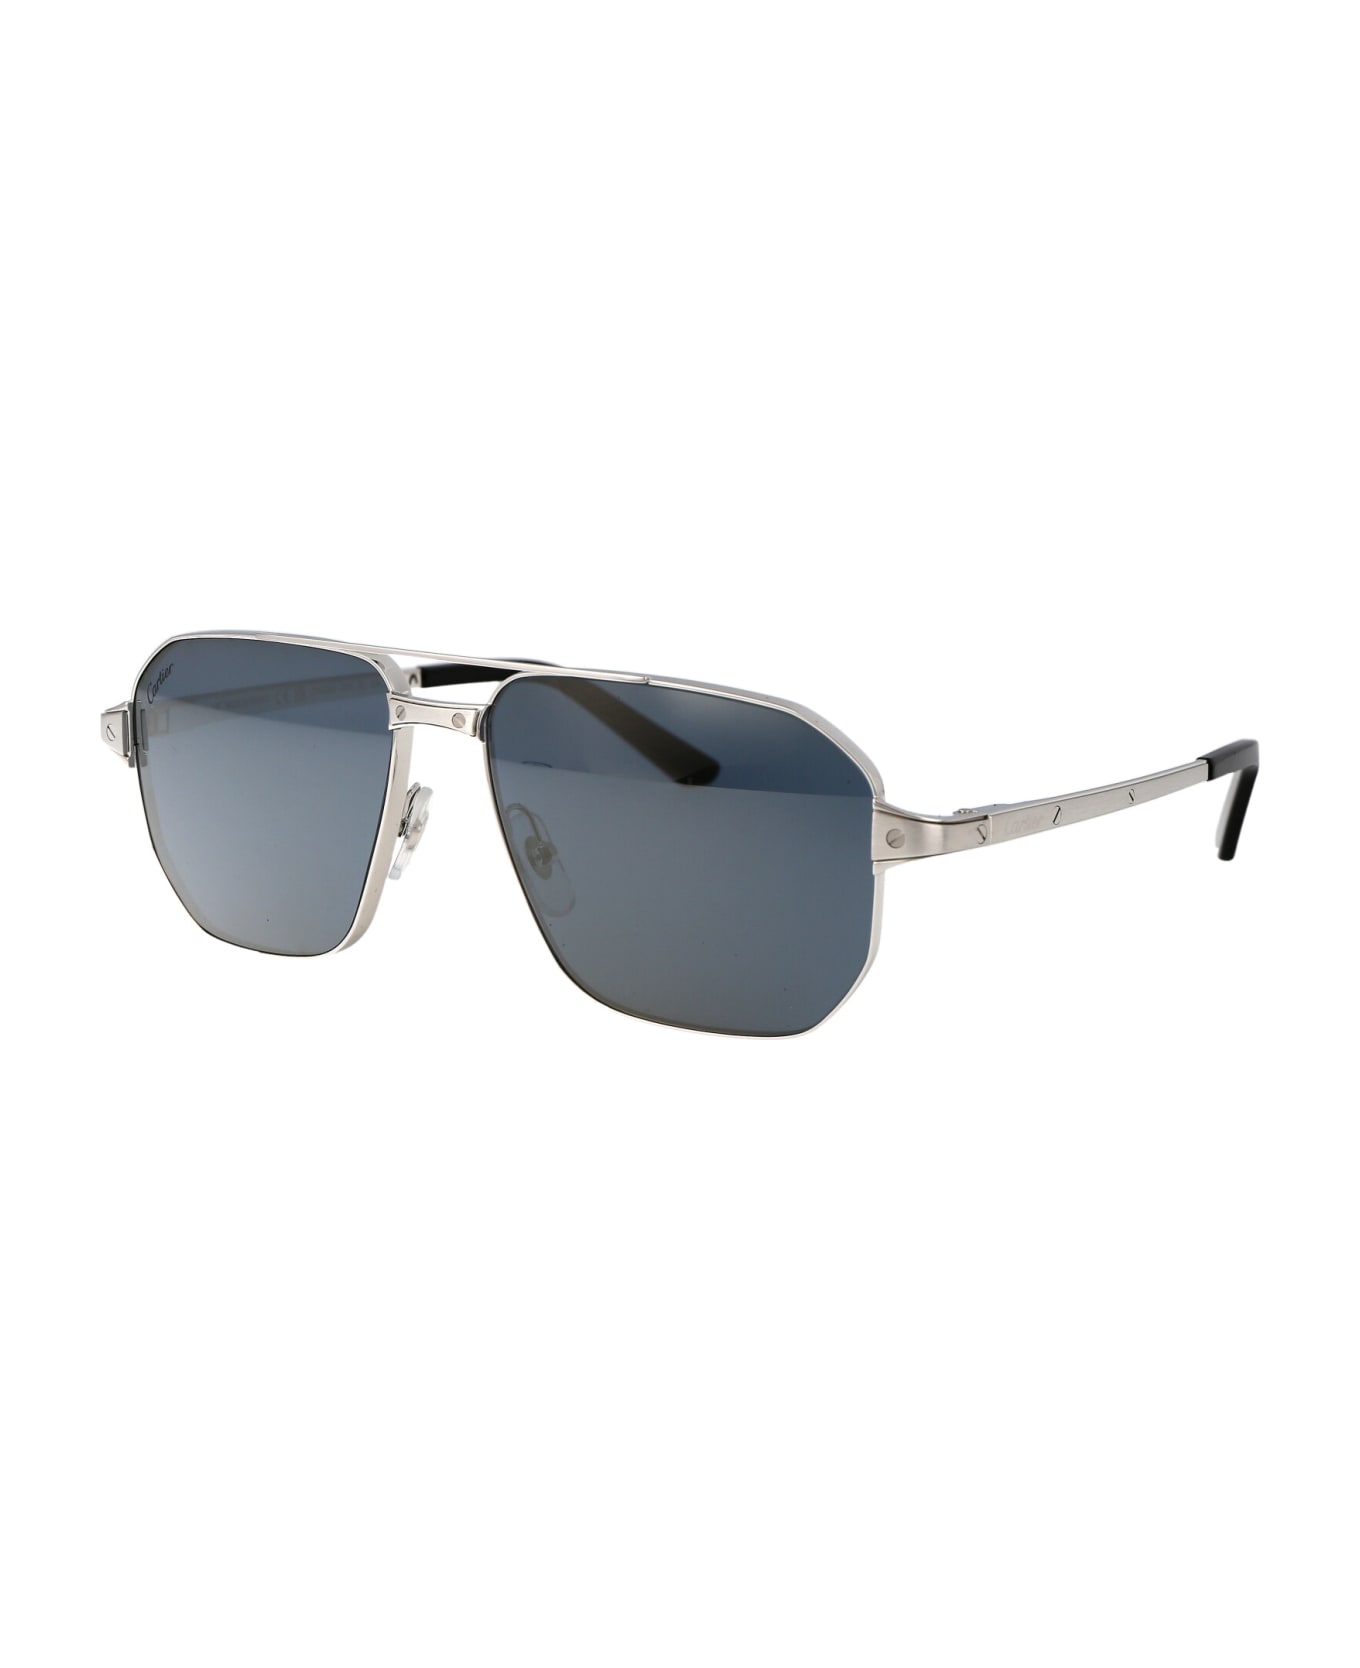 Cartier Eyewear Ct0424s Sunglasses - 004 SILVER SILVER BLUE